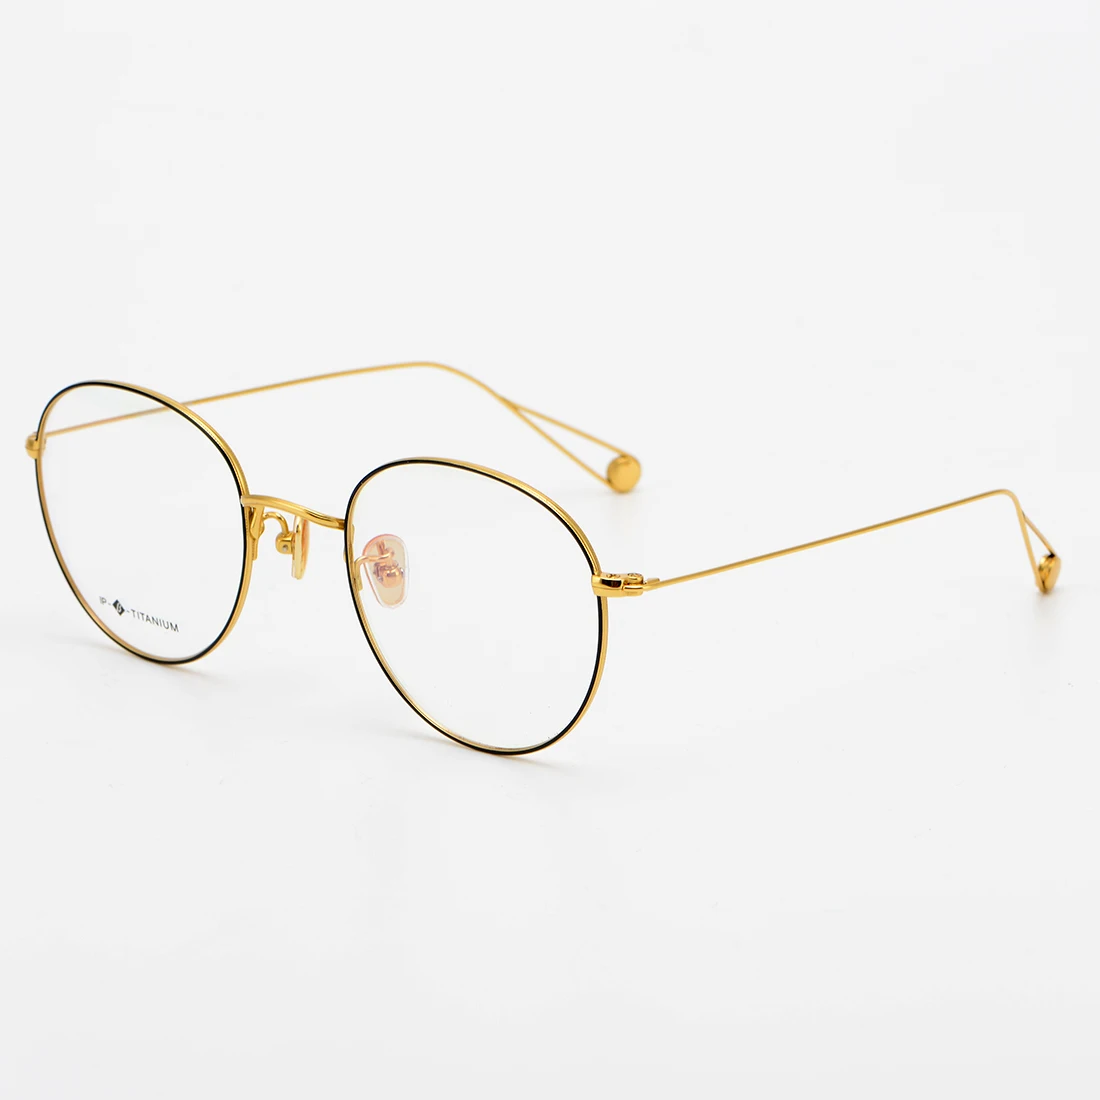 Business Men's Pure Titanium Glasses Frame High Quality Non-fading 